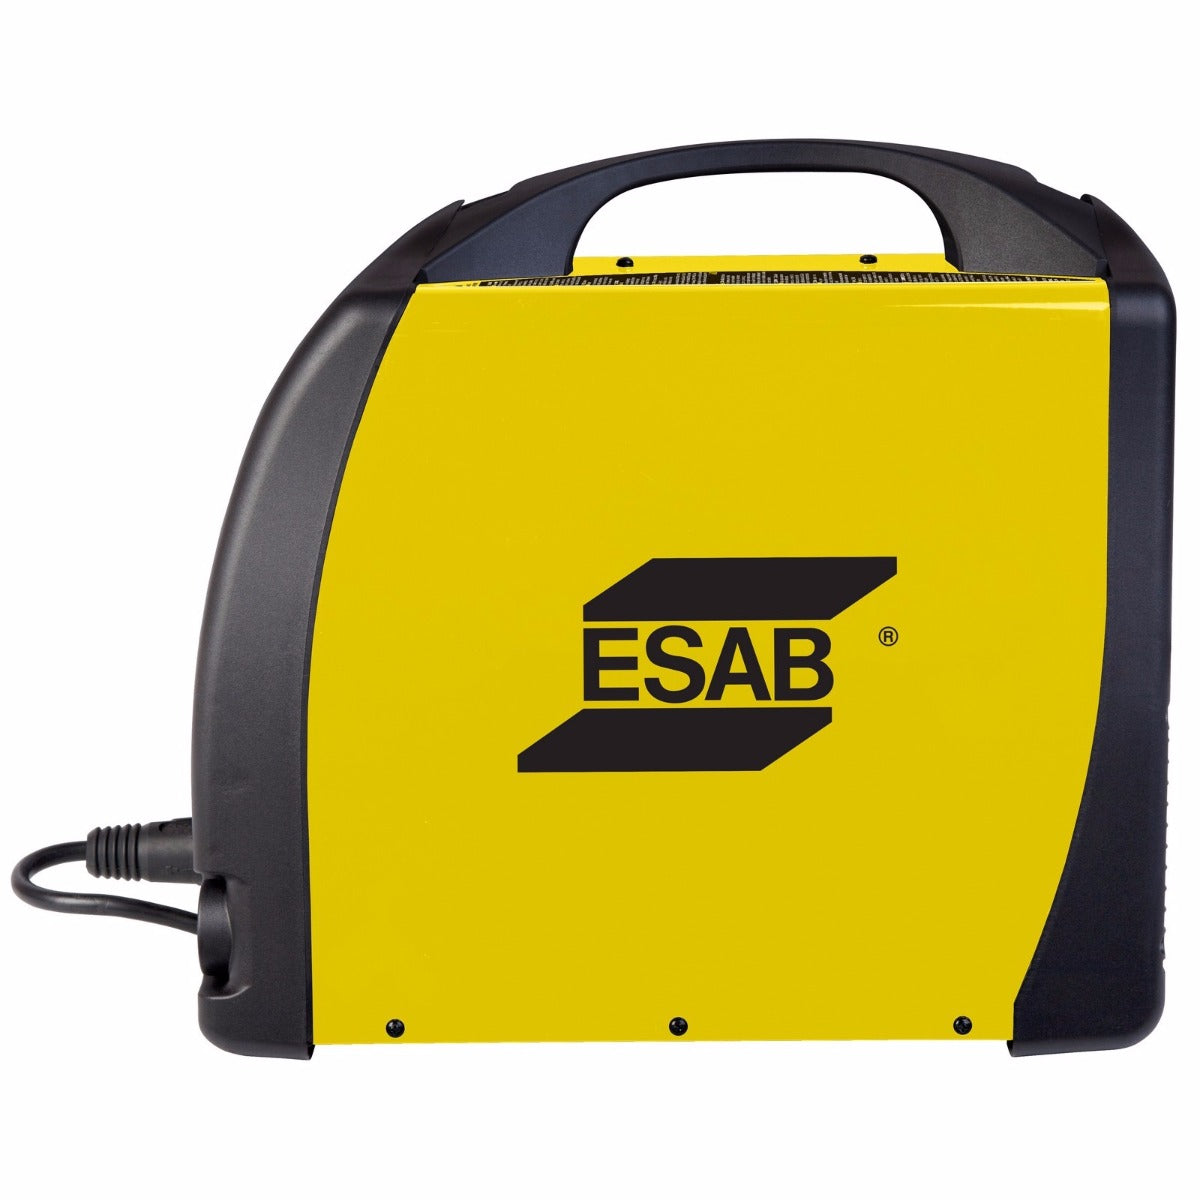 ESAB Fabricator 141i Multi Process Welding System (W1003141) with TIG Torch (W4013802)